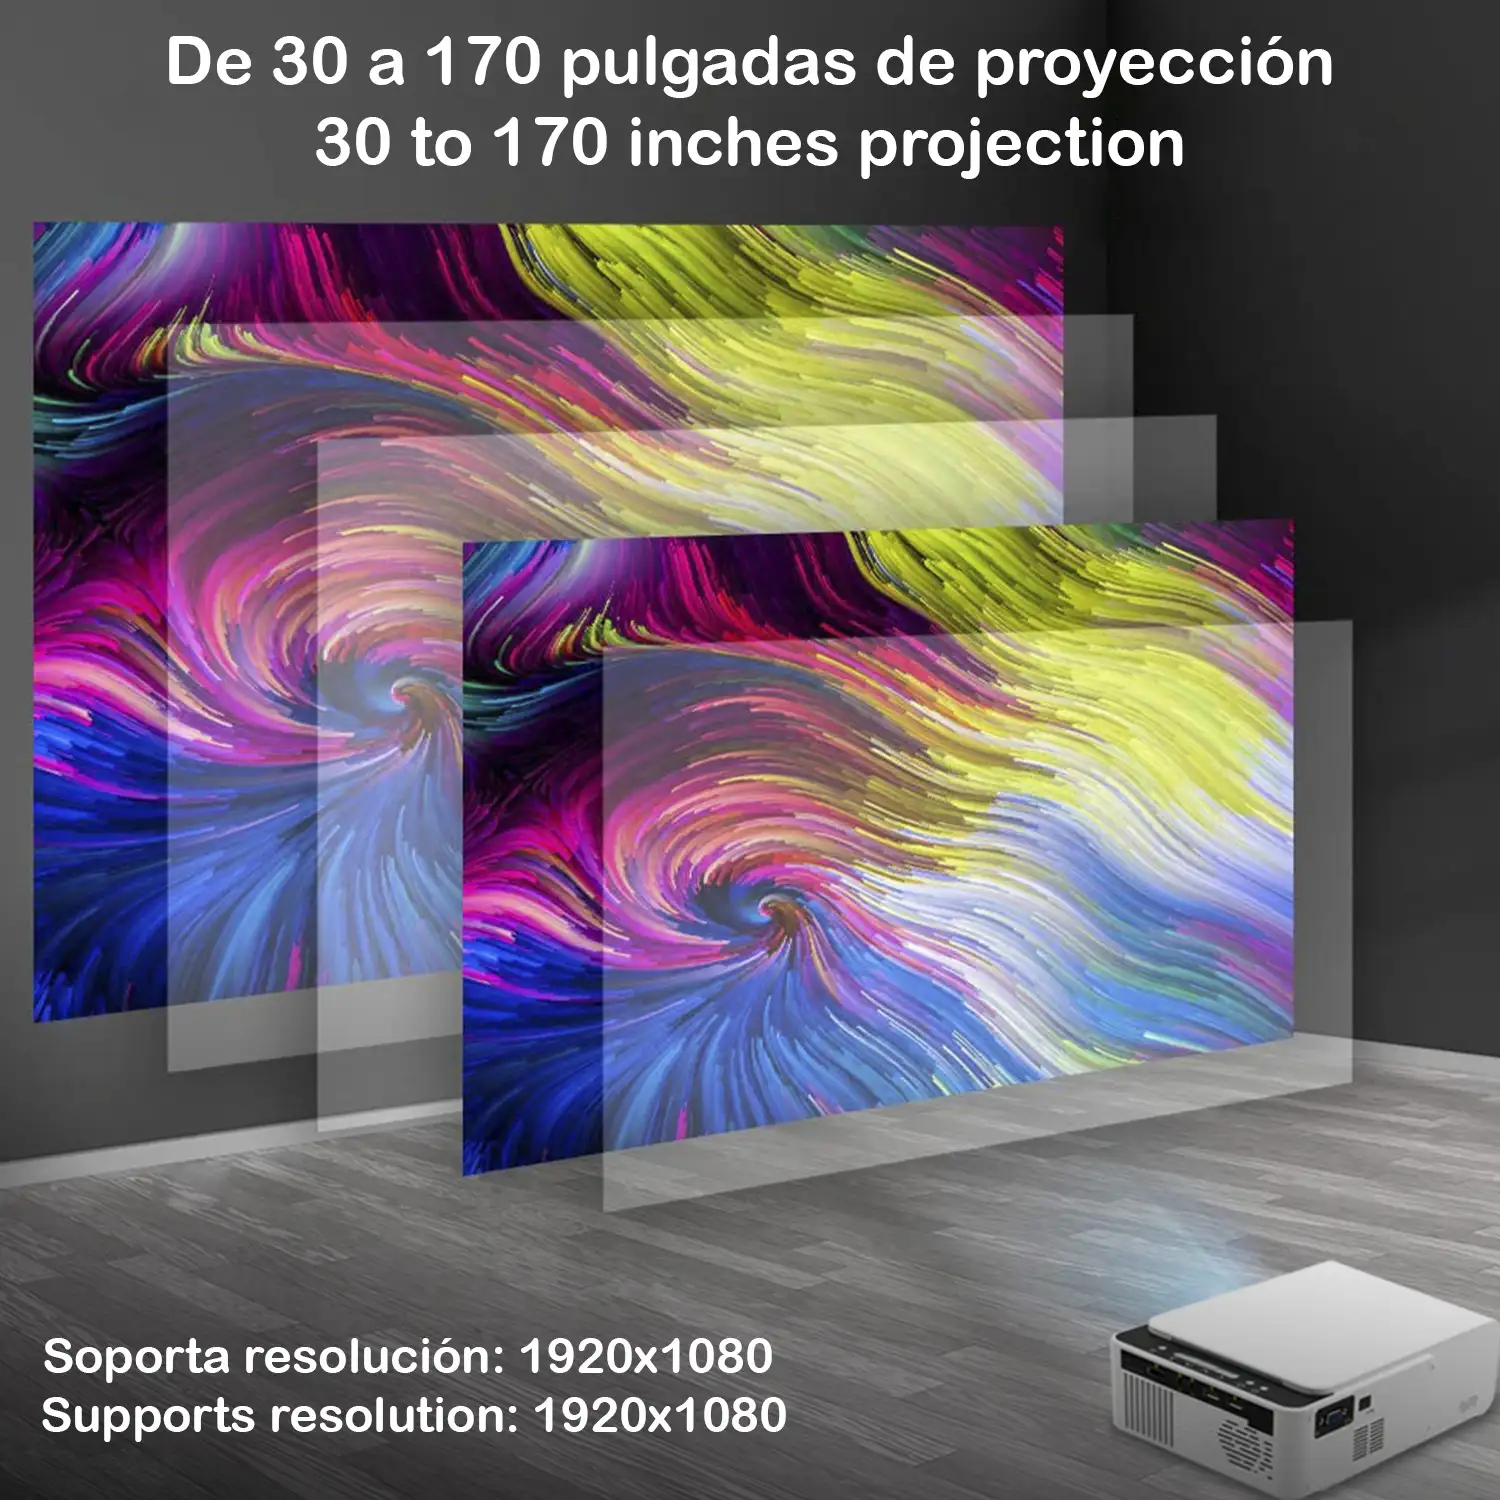 Video proyector LED T500 Wifi, con Airplay y Miracast. Soporta Full HD1080, 30 a 170 pulgadas, altavoz y mando.